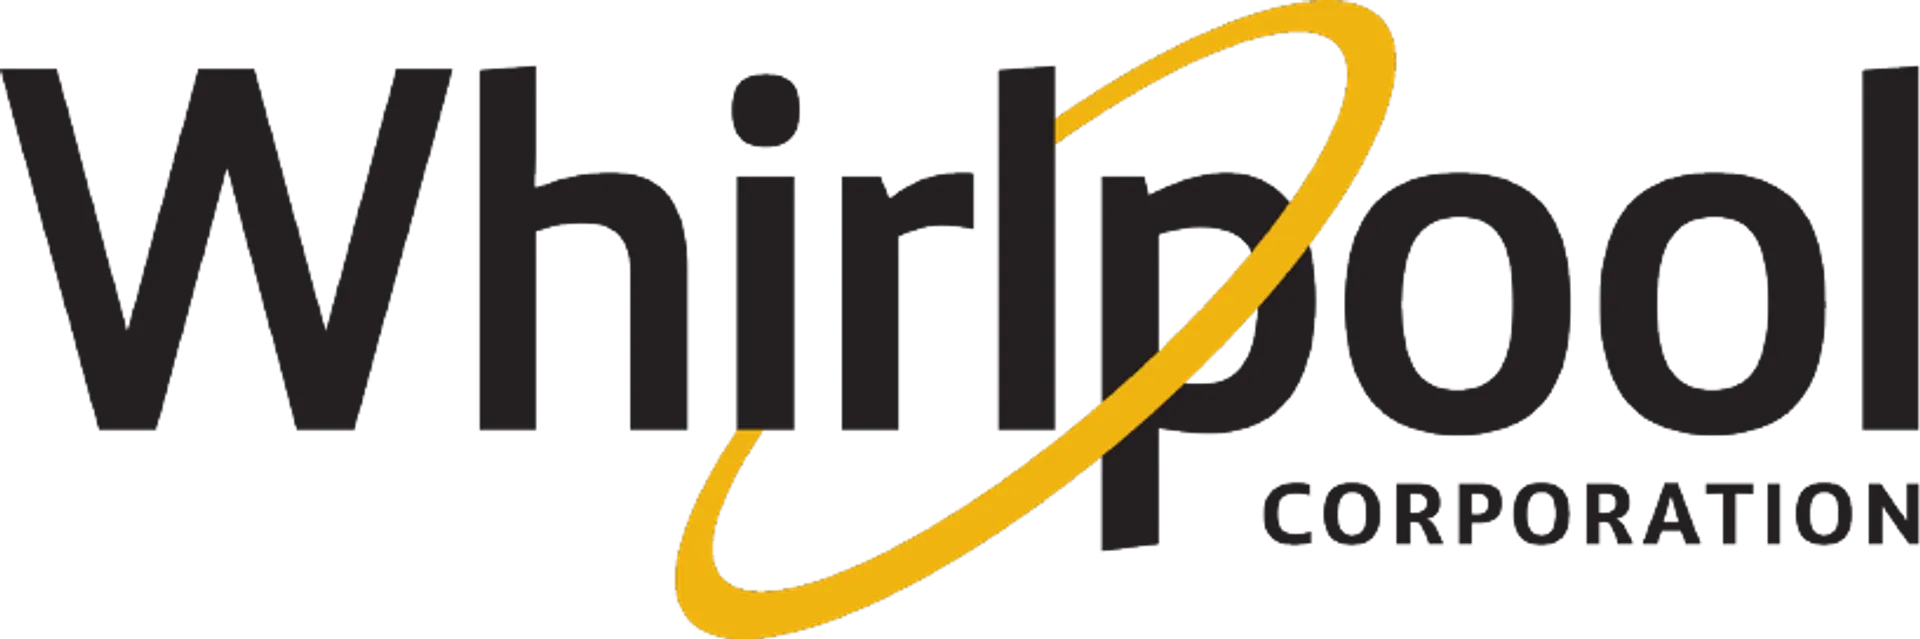 WHIRLPOOL logo. Current catalogue